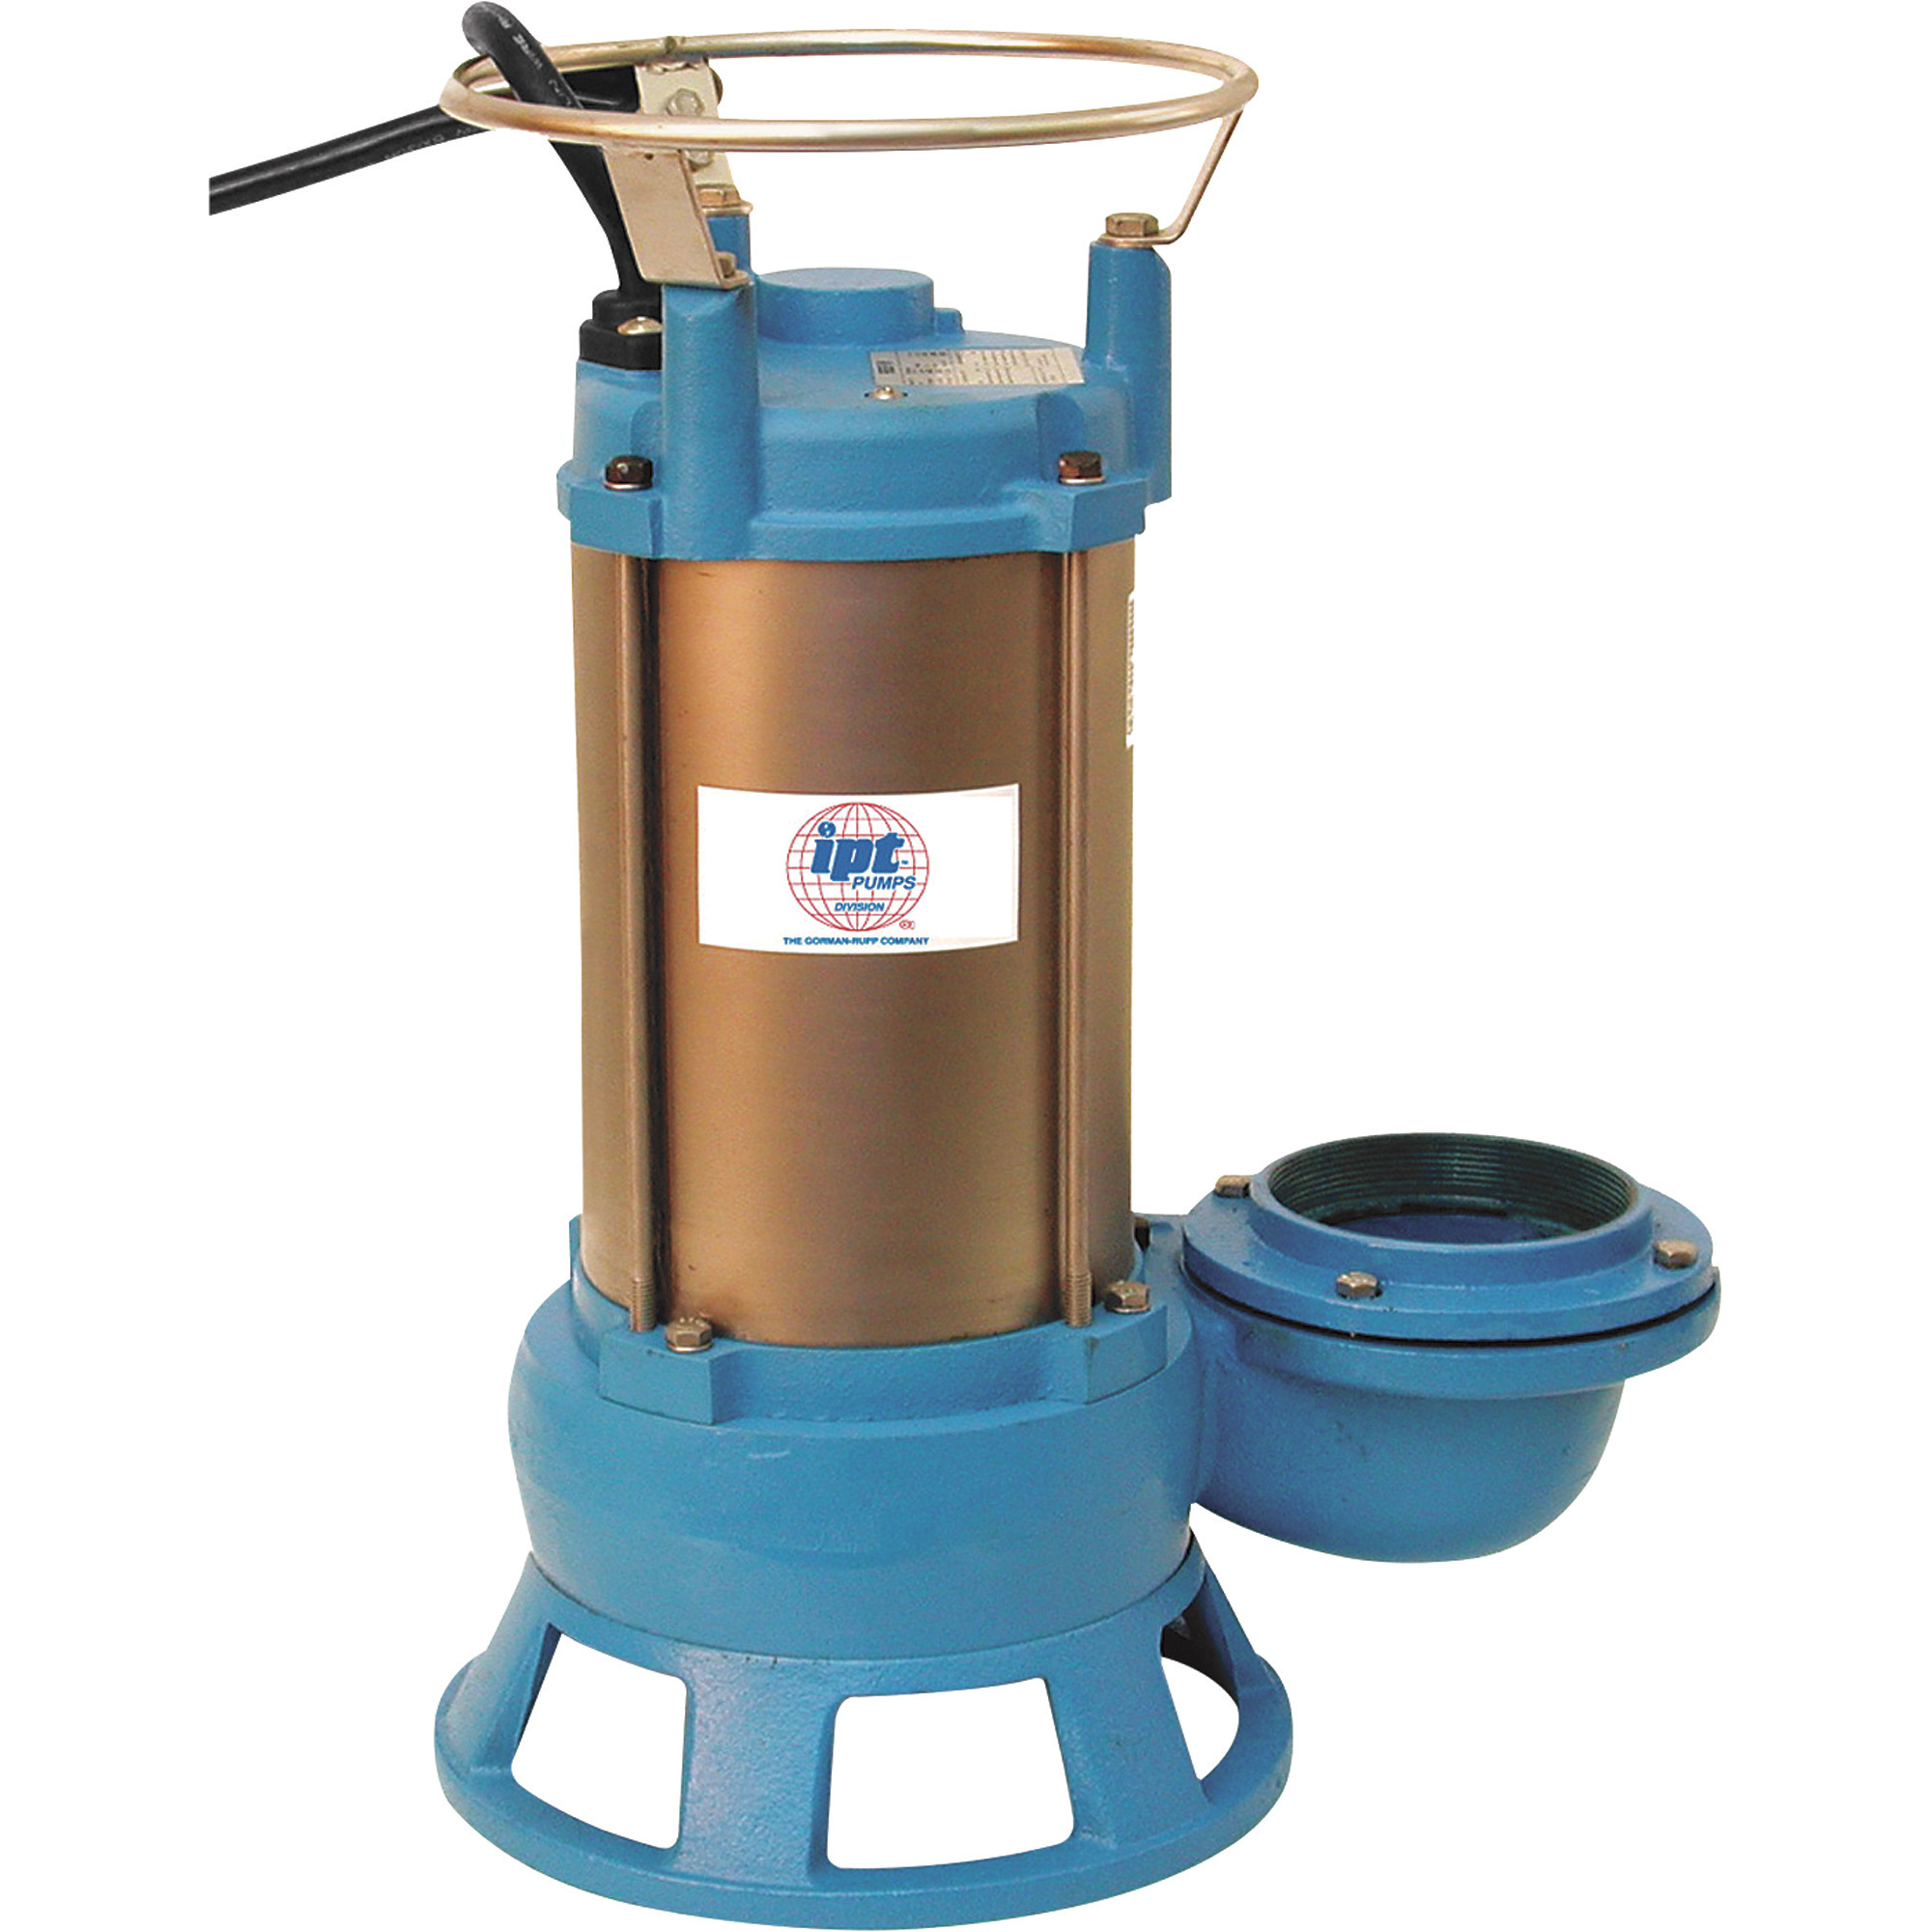 IPT Centrifugal Submersible Shredder Sewage Water Pump â 7,200 GPH, 1 HP, 2Inch Ports, Model 5760-IPT-95